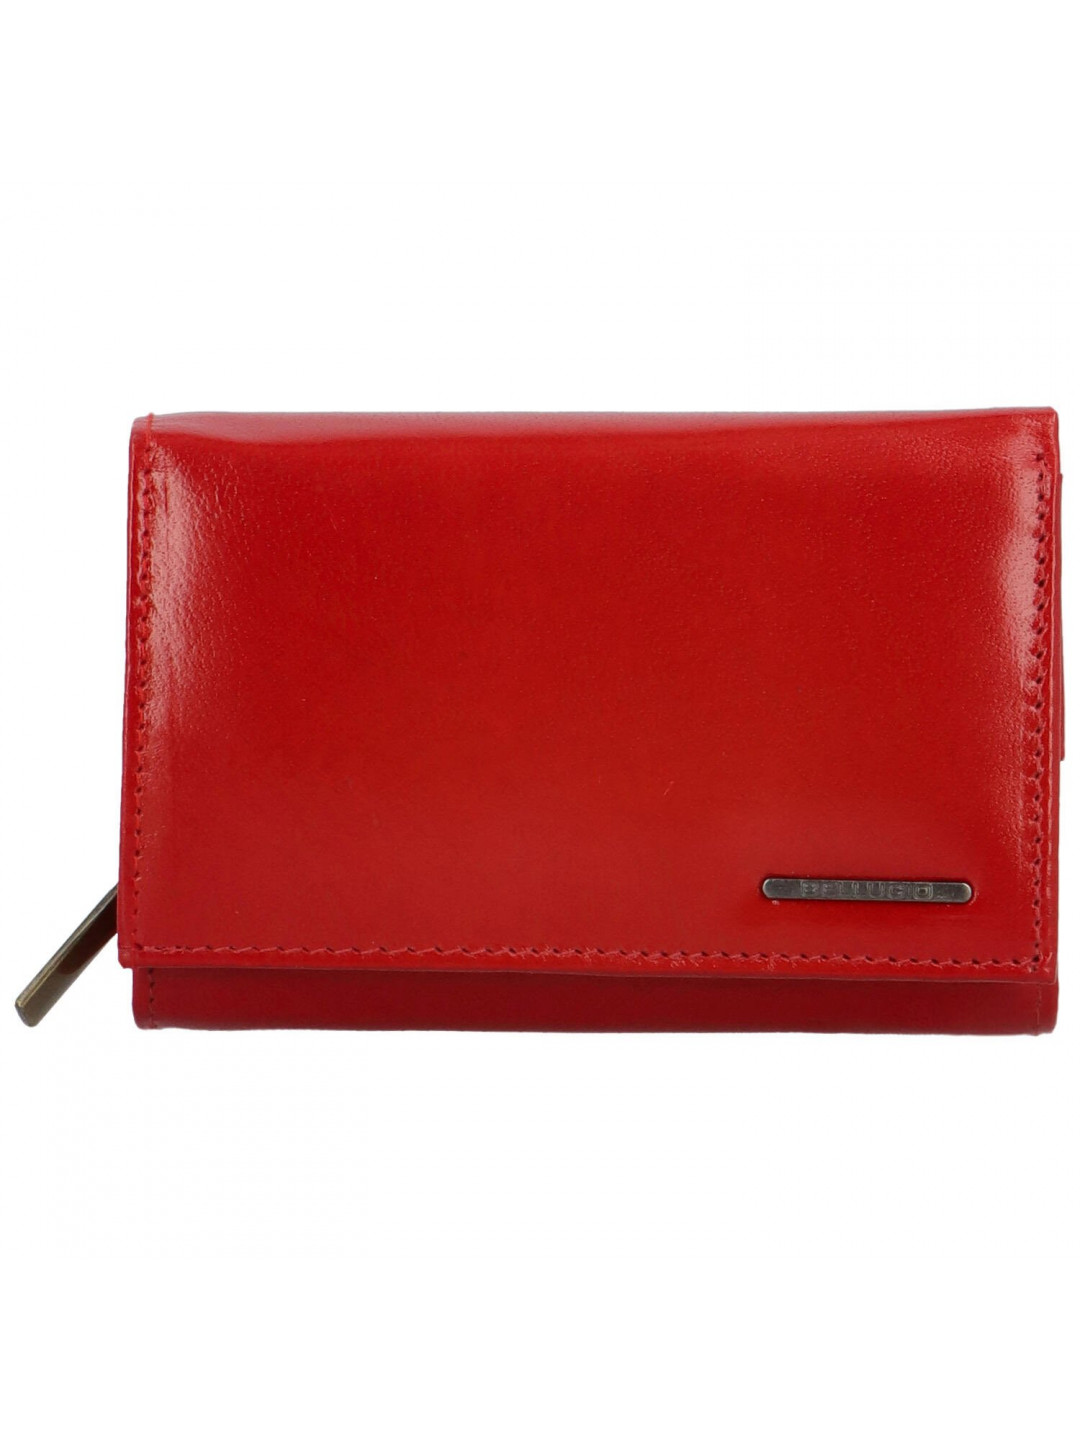 Trendy dámská kožená peněženka Bellugio Waltera červená